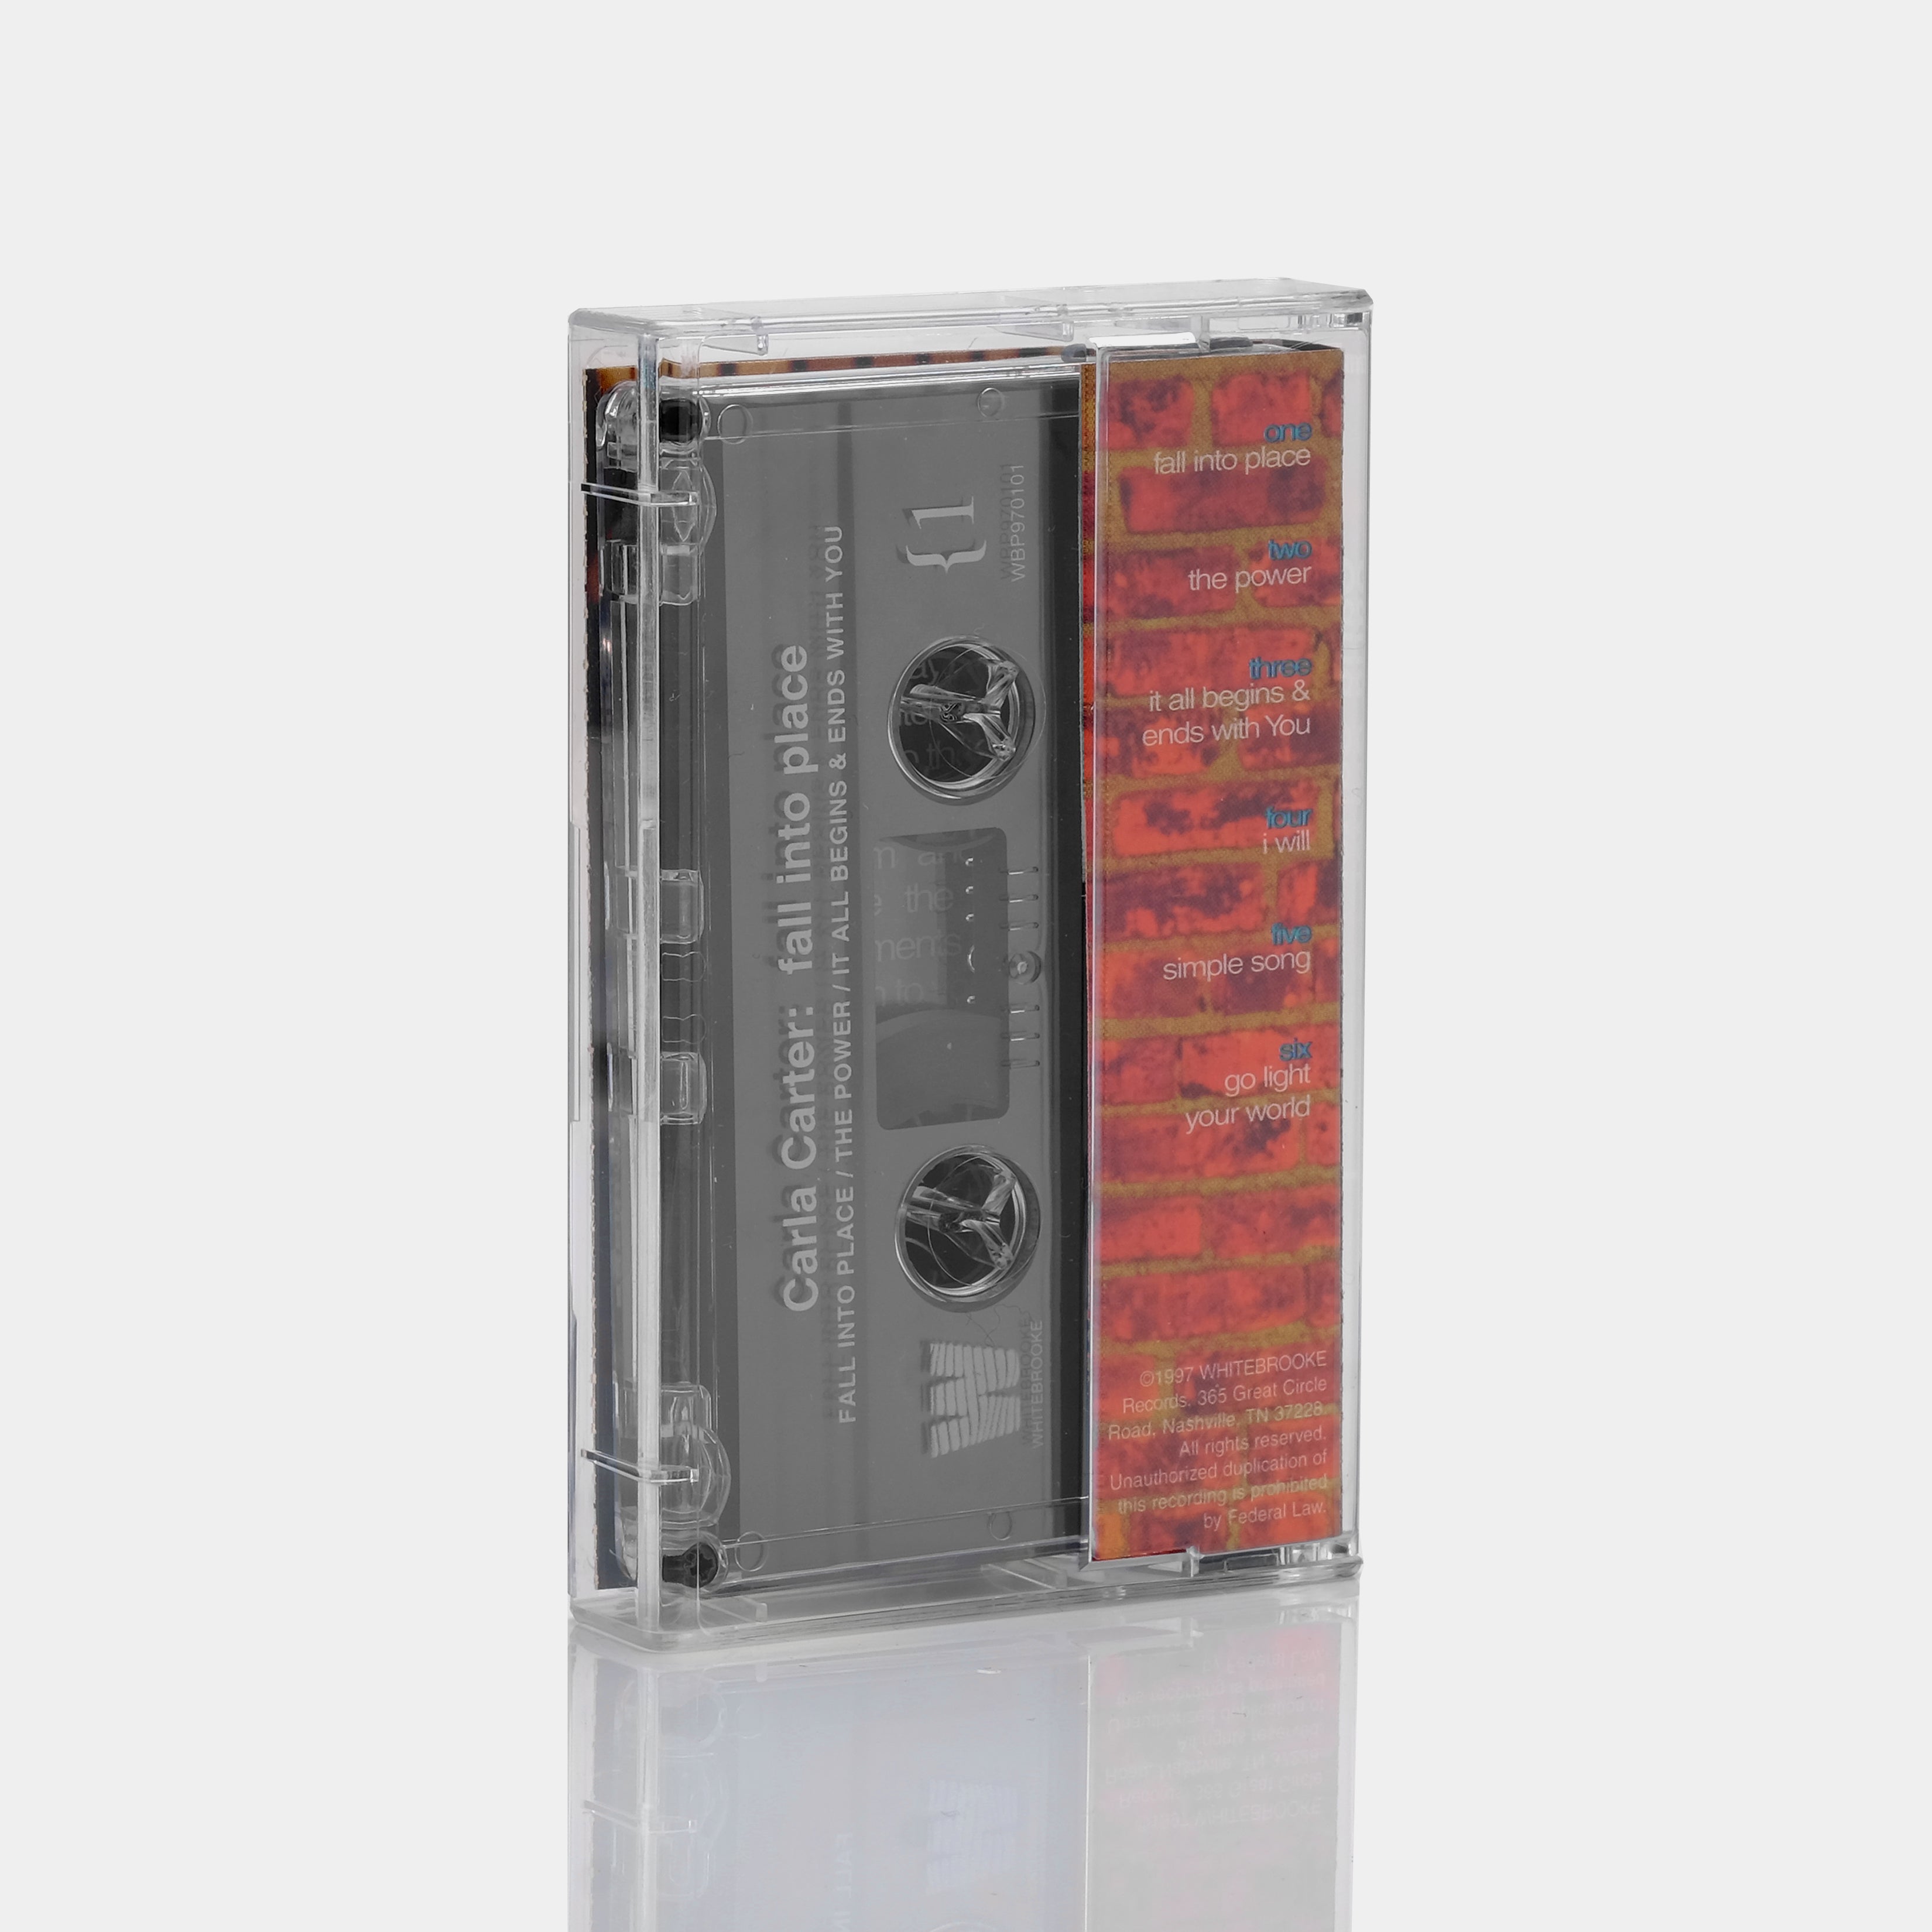 Carla Carter - Fall Into Place Cassette Tape